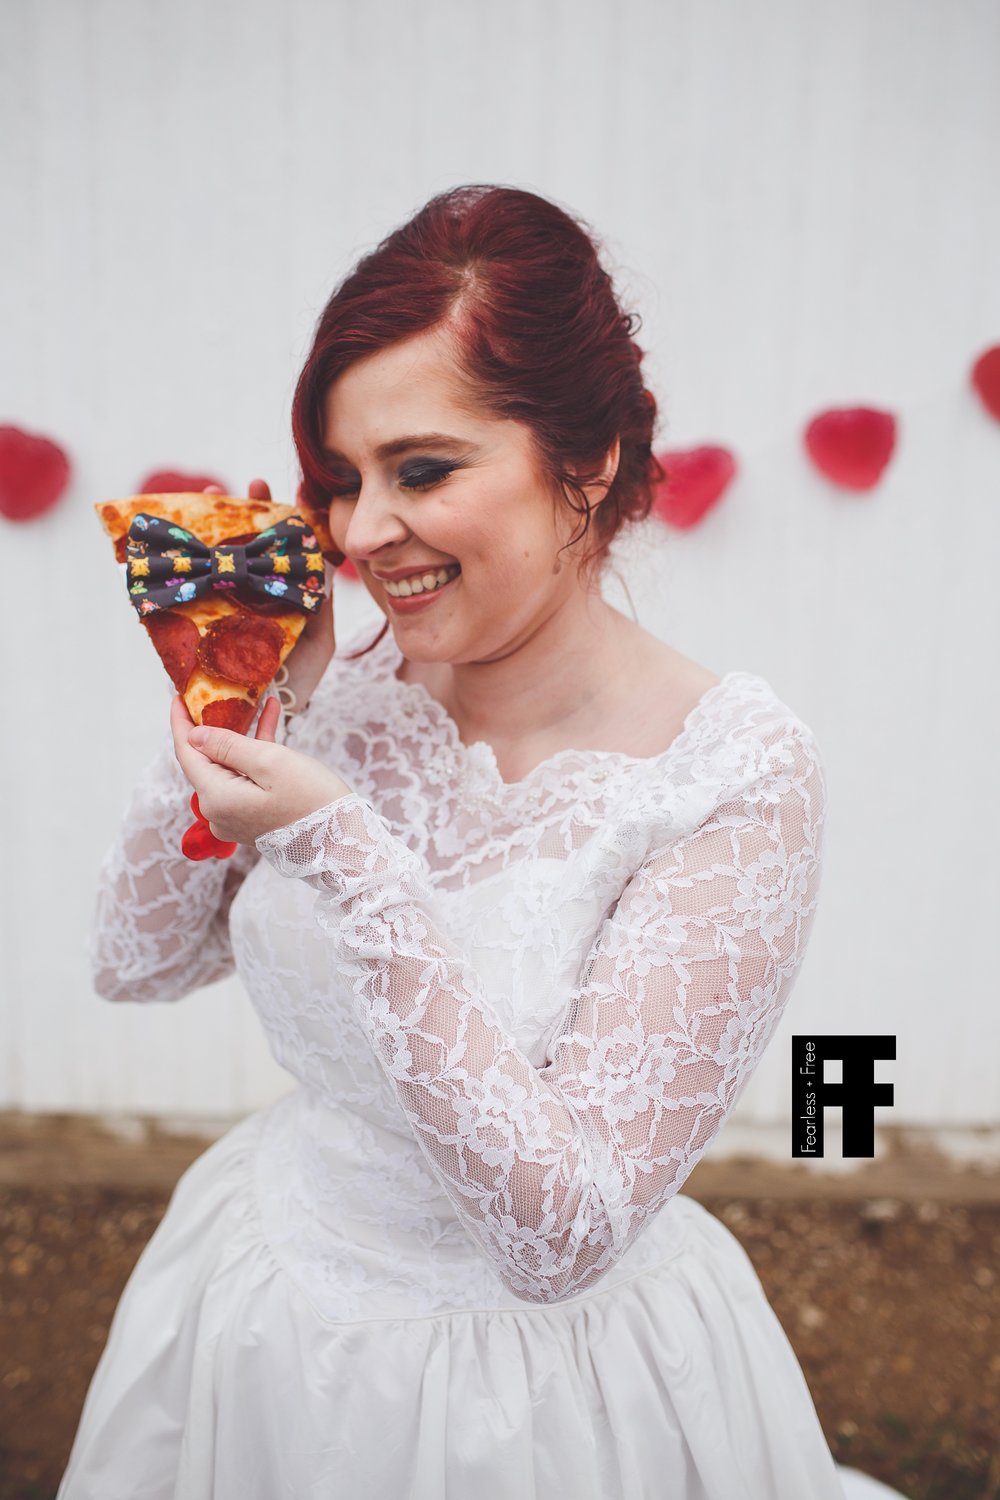 fearlessfreeseniors-columbus-ohio-senior-photographer-pizza-bride-girl-marries-pizza-wearing-bowtie